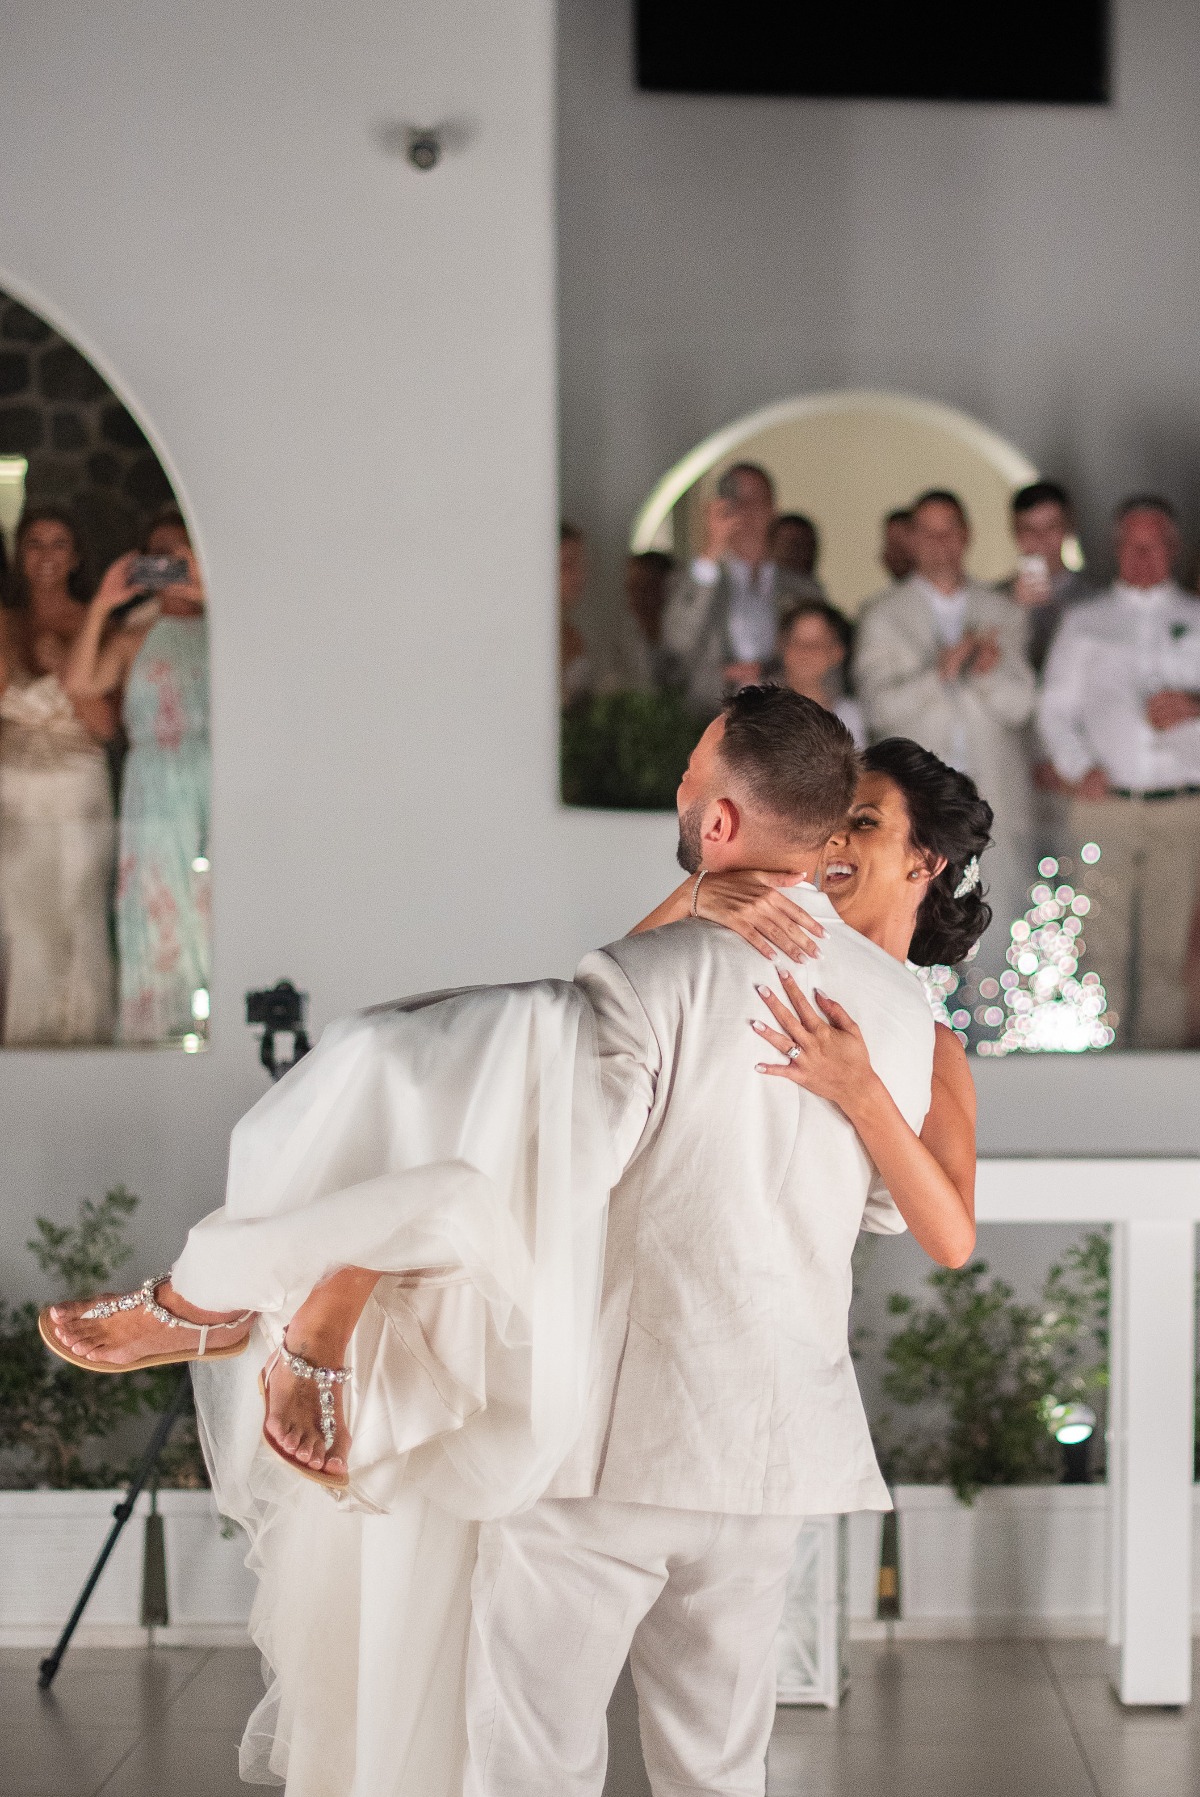 wedding dance at Santorini wedding